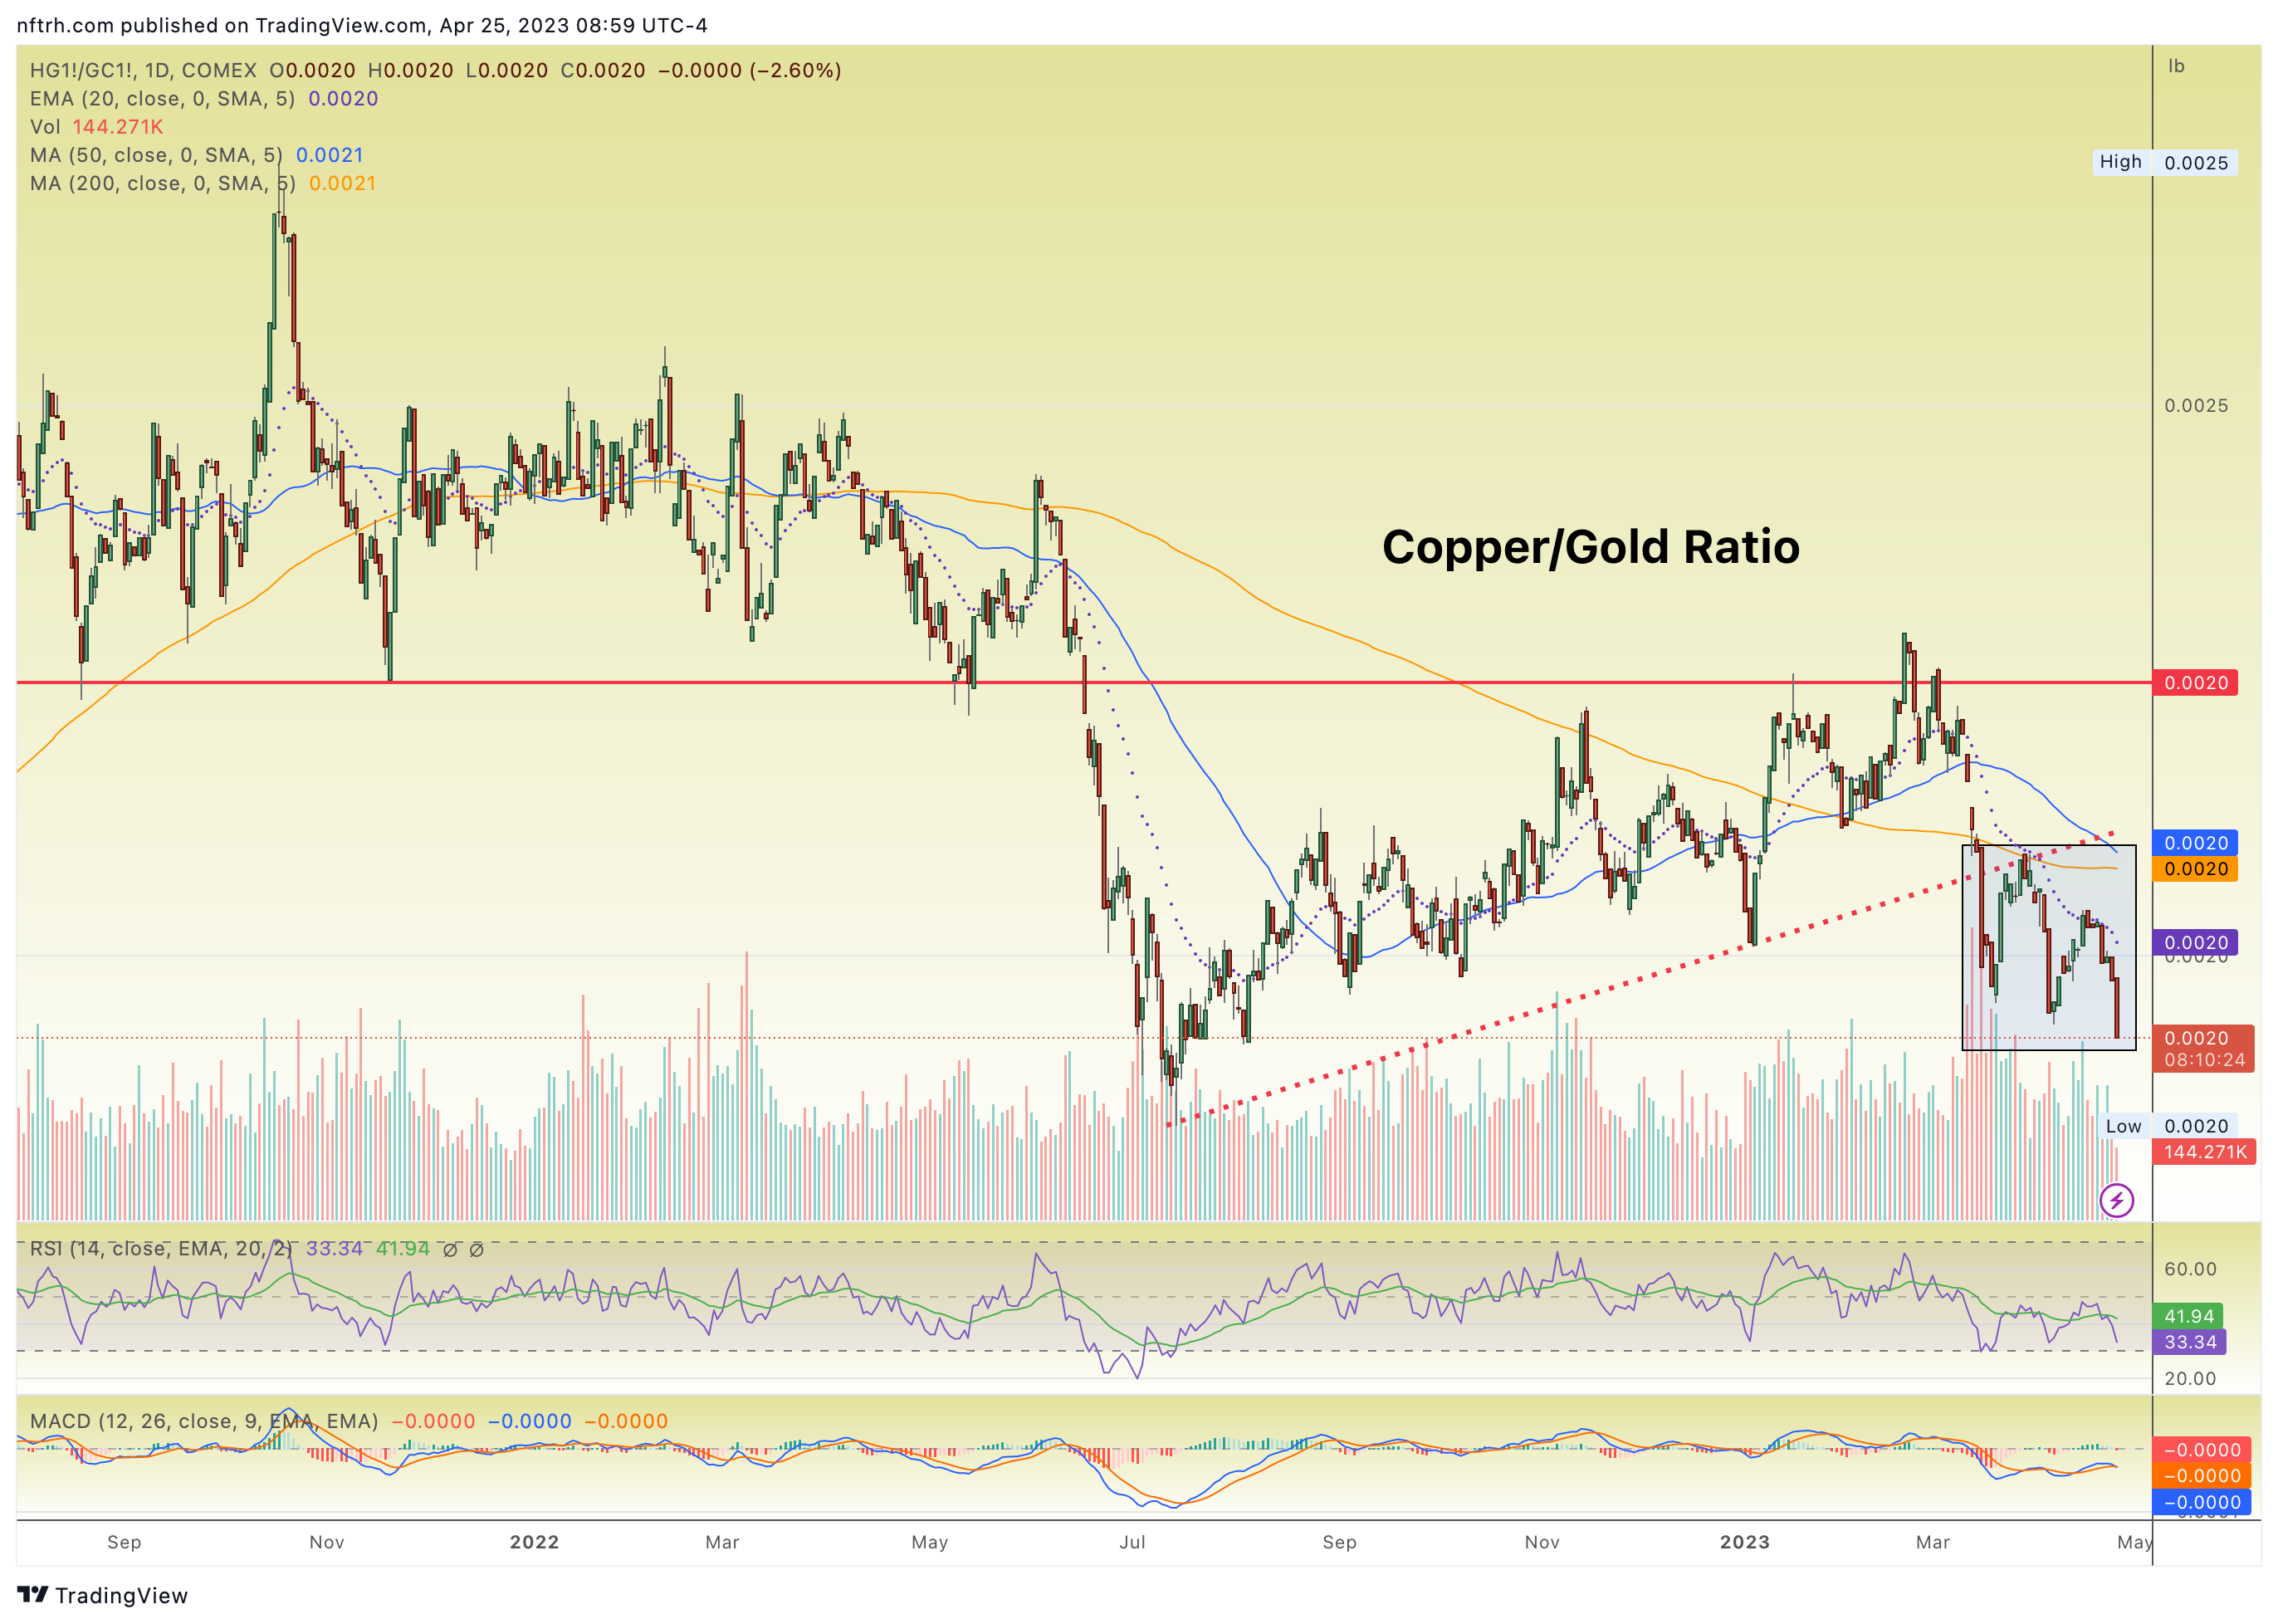 copper/gold ratio